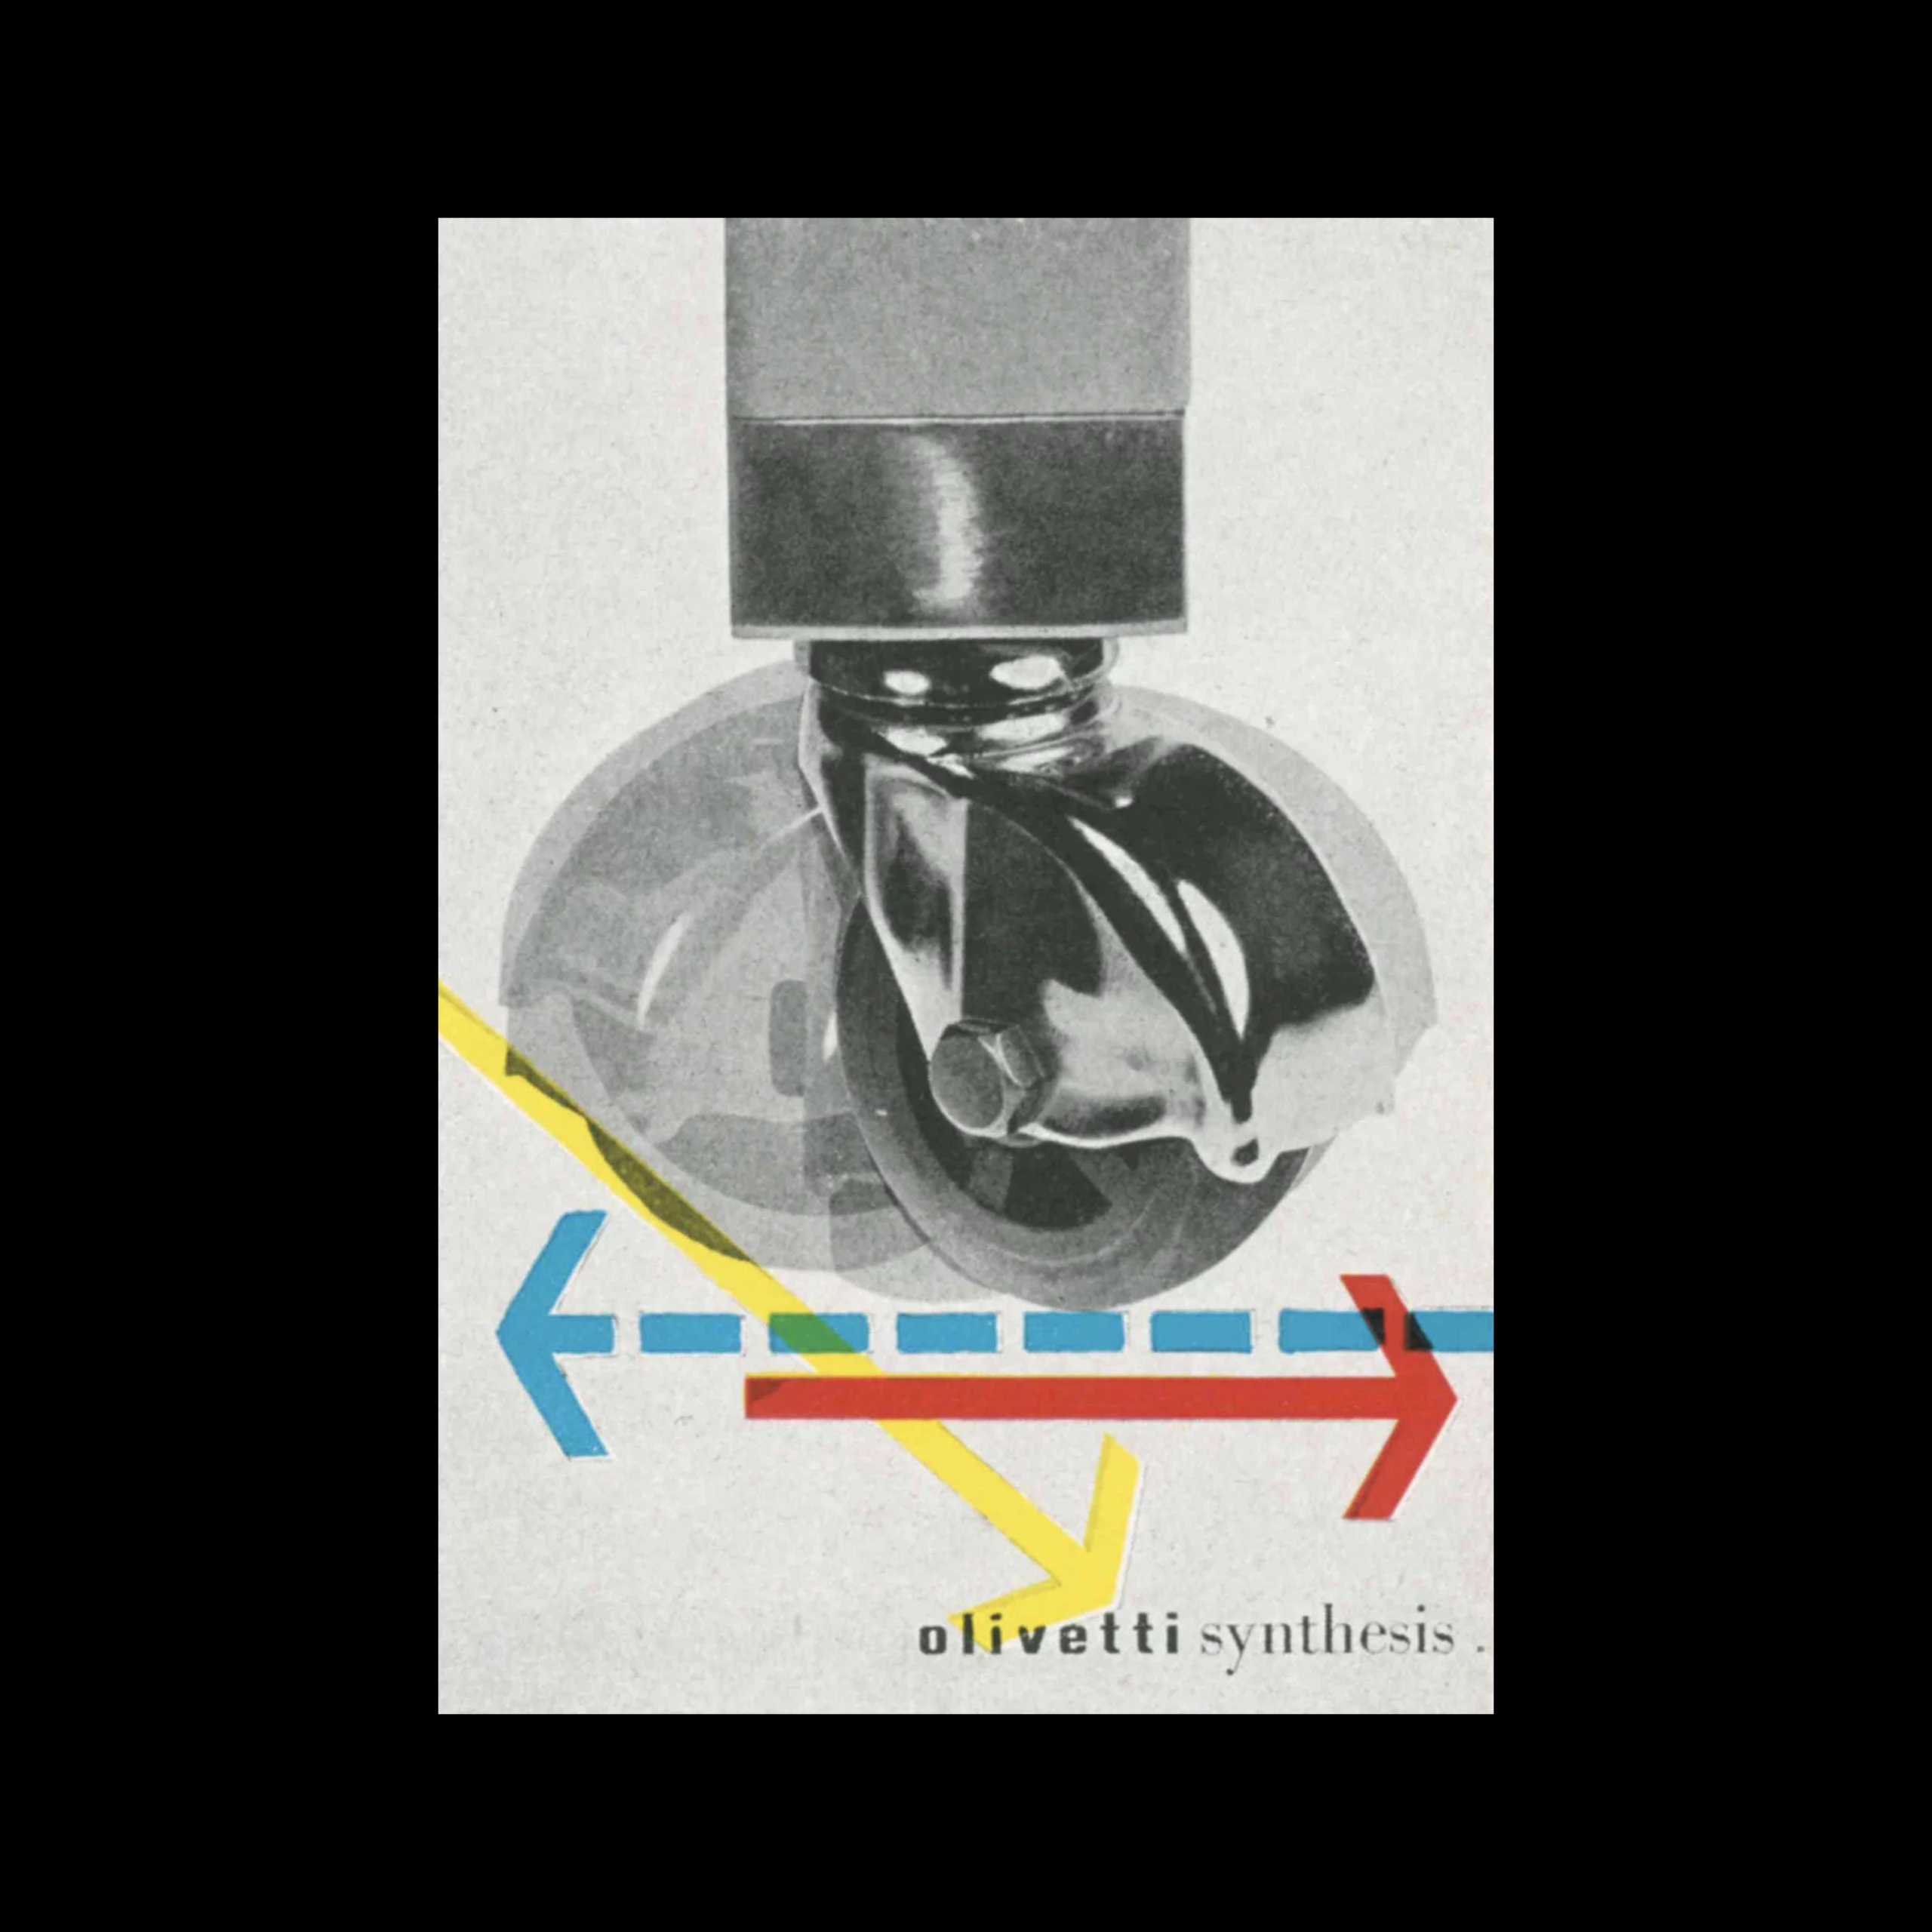 Pirelli Prospectus Cover designed by Walter Ballmer. Scanned from Gebrauchgraphik, 1, 1958.